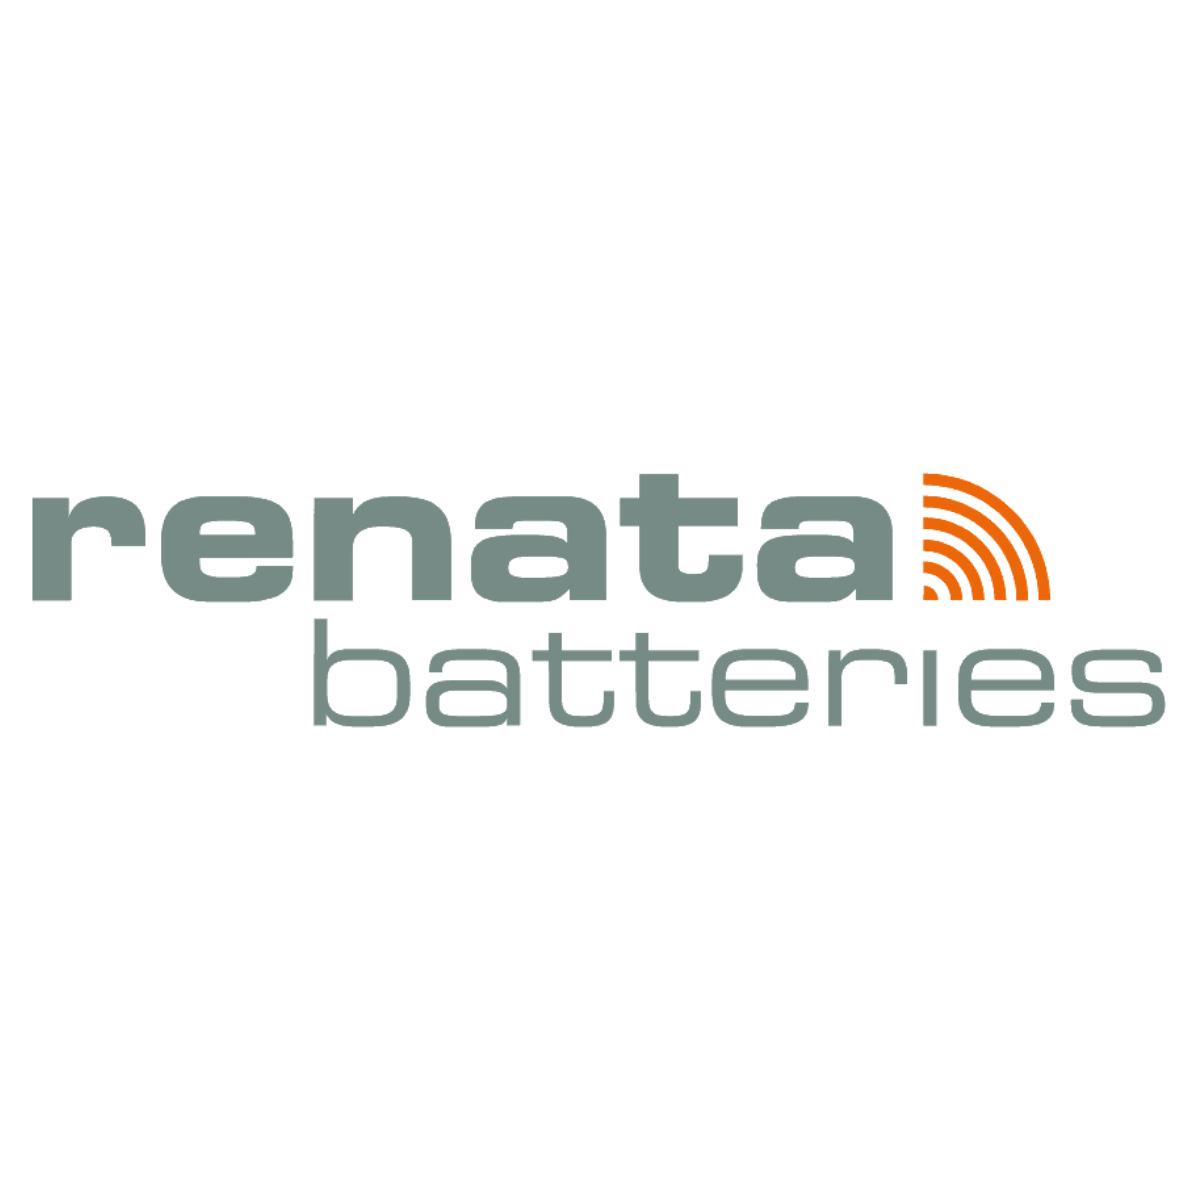  Renata 364 SR621SW Batteries - 1.55V Silver Oxide 364